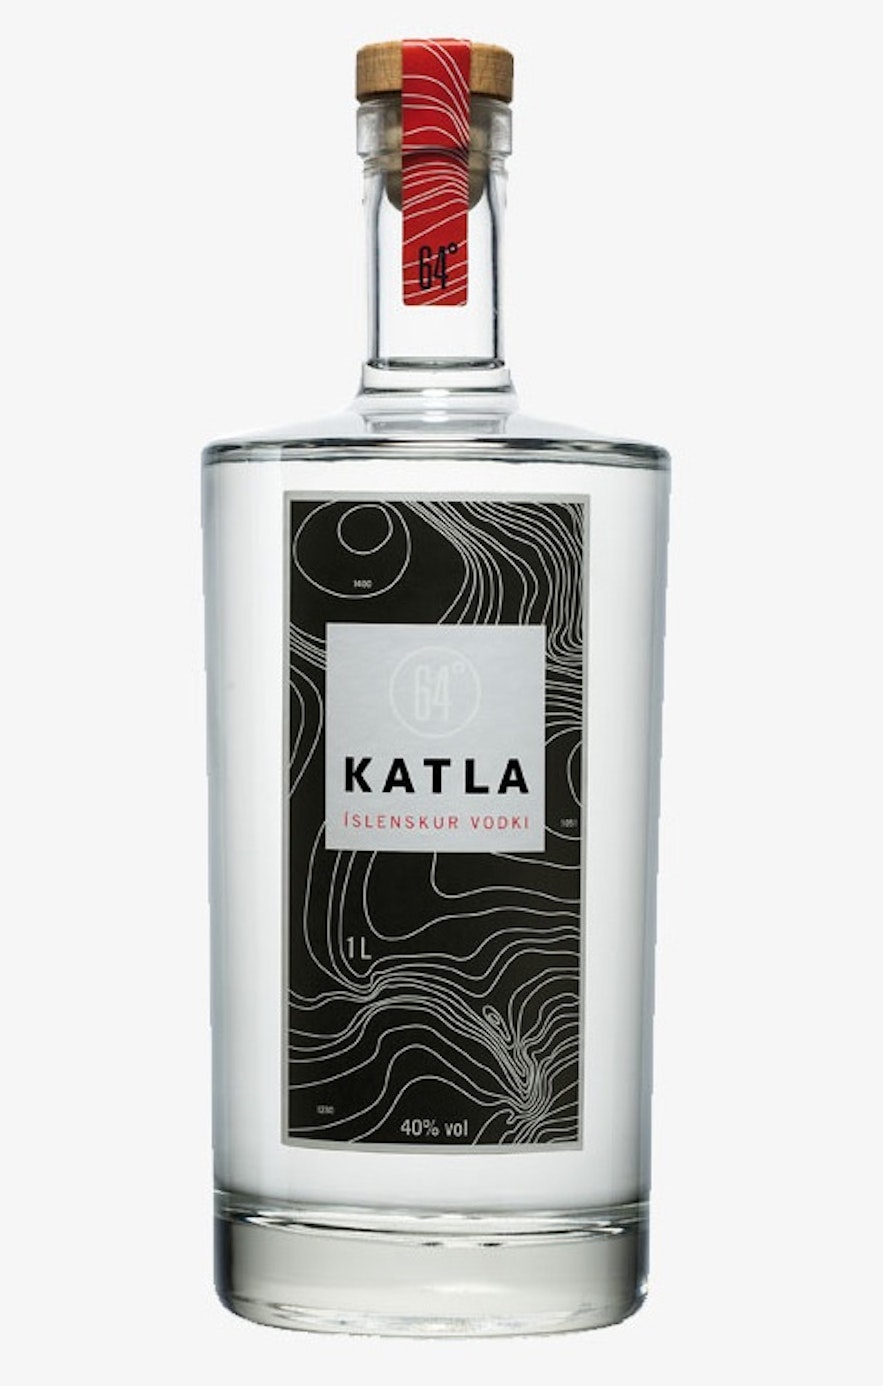 Katla伏特加由一家家庭经营的微型酒厂生产。